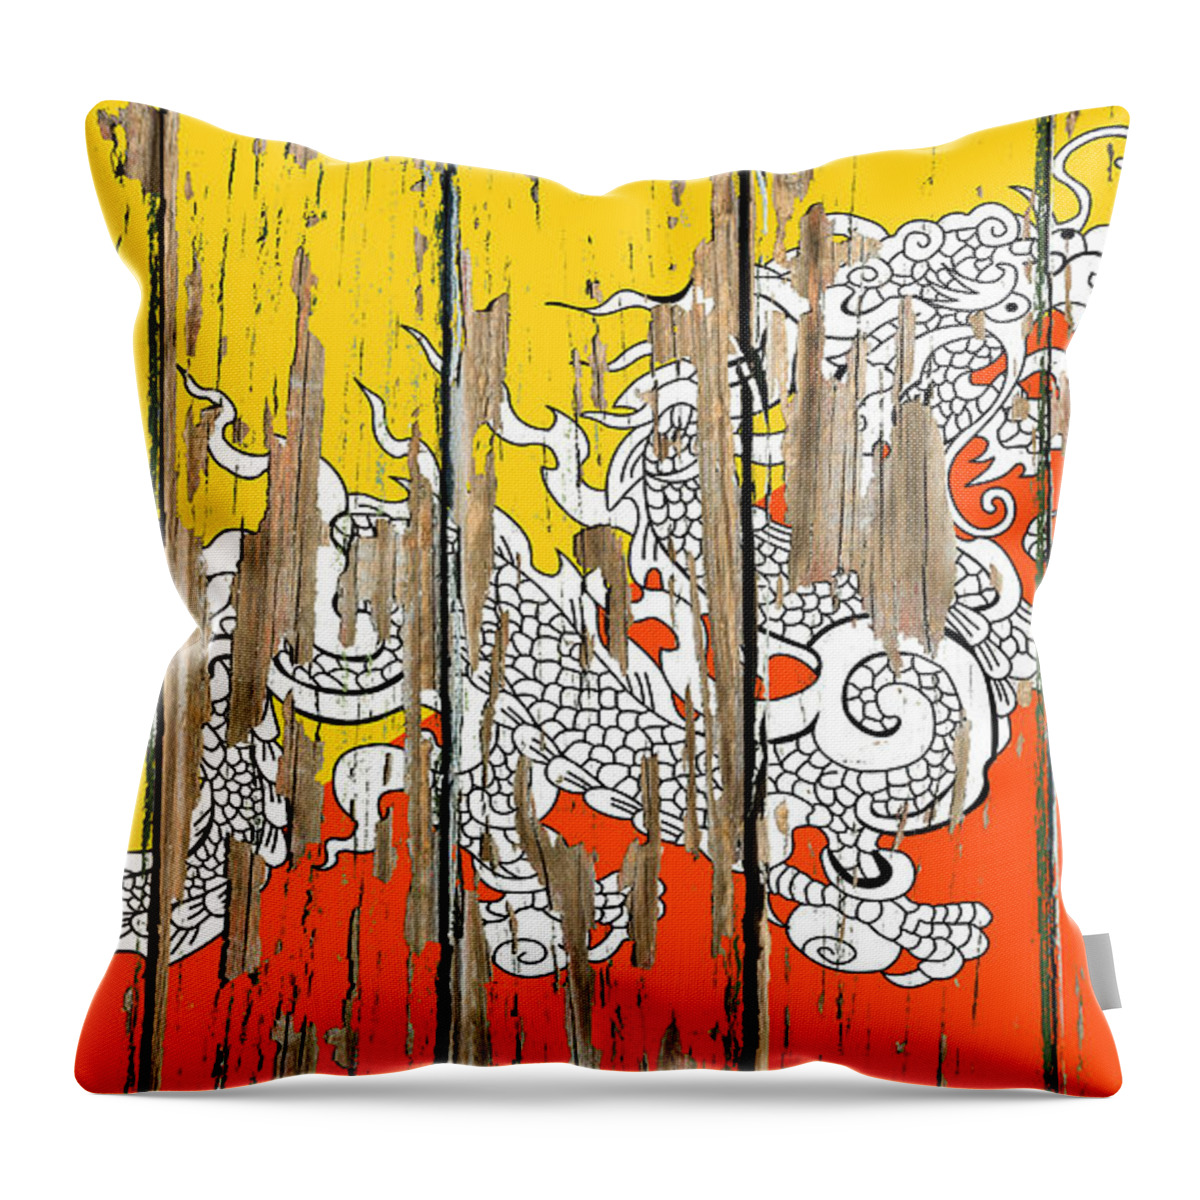 Bhutan Throw Pillow featuring the mixed media Bhutan Flag Peeling Paint Distressed Barnwood by Design Turnpike